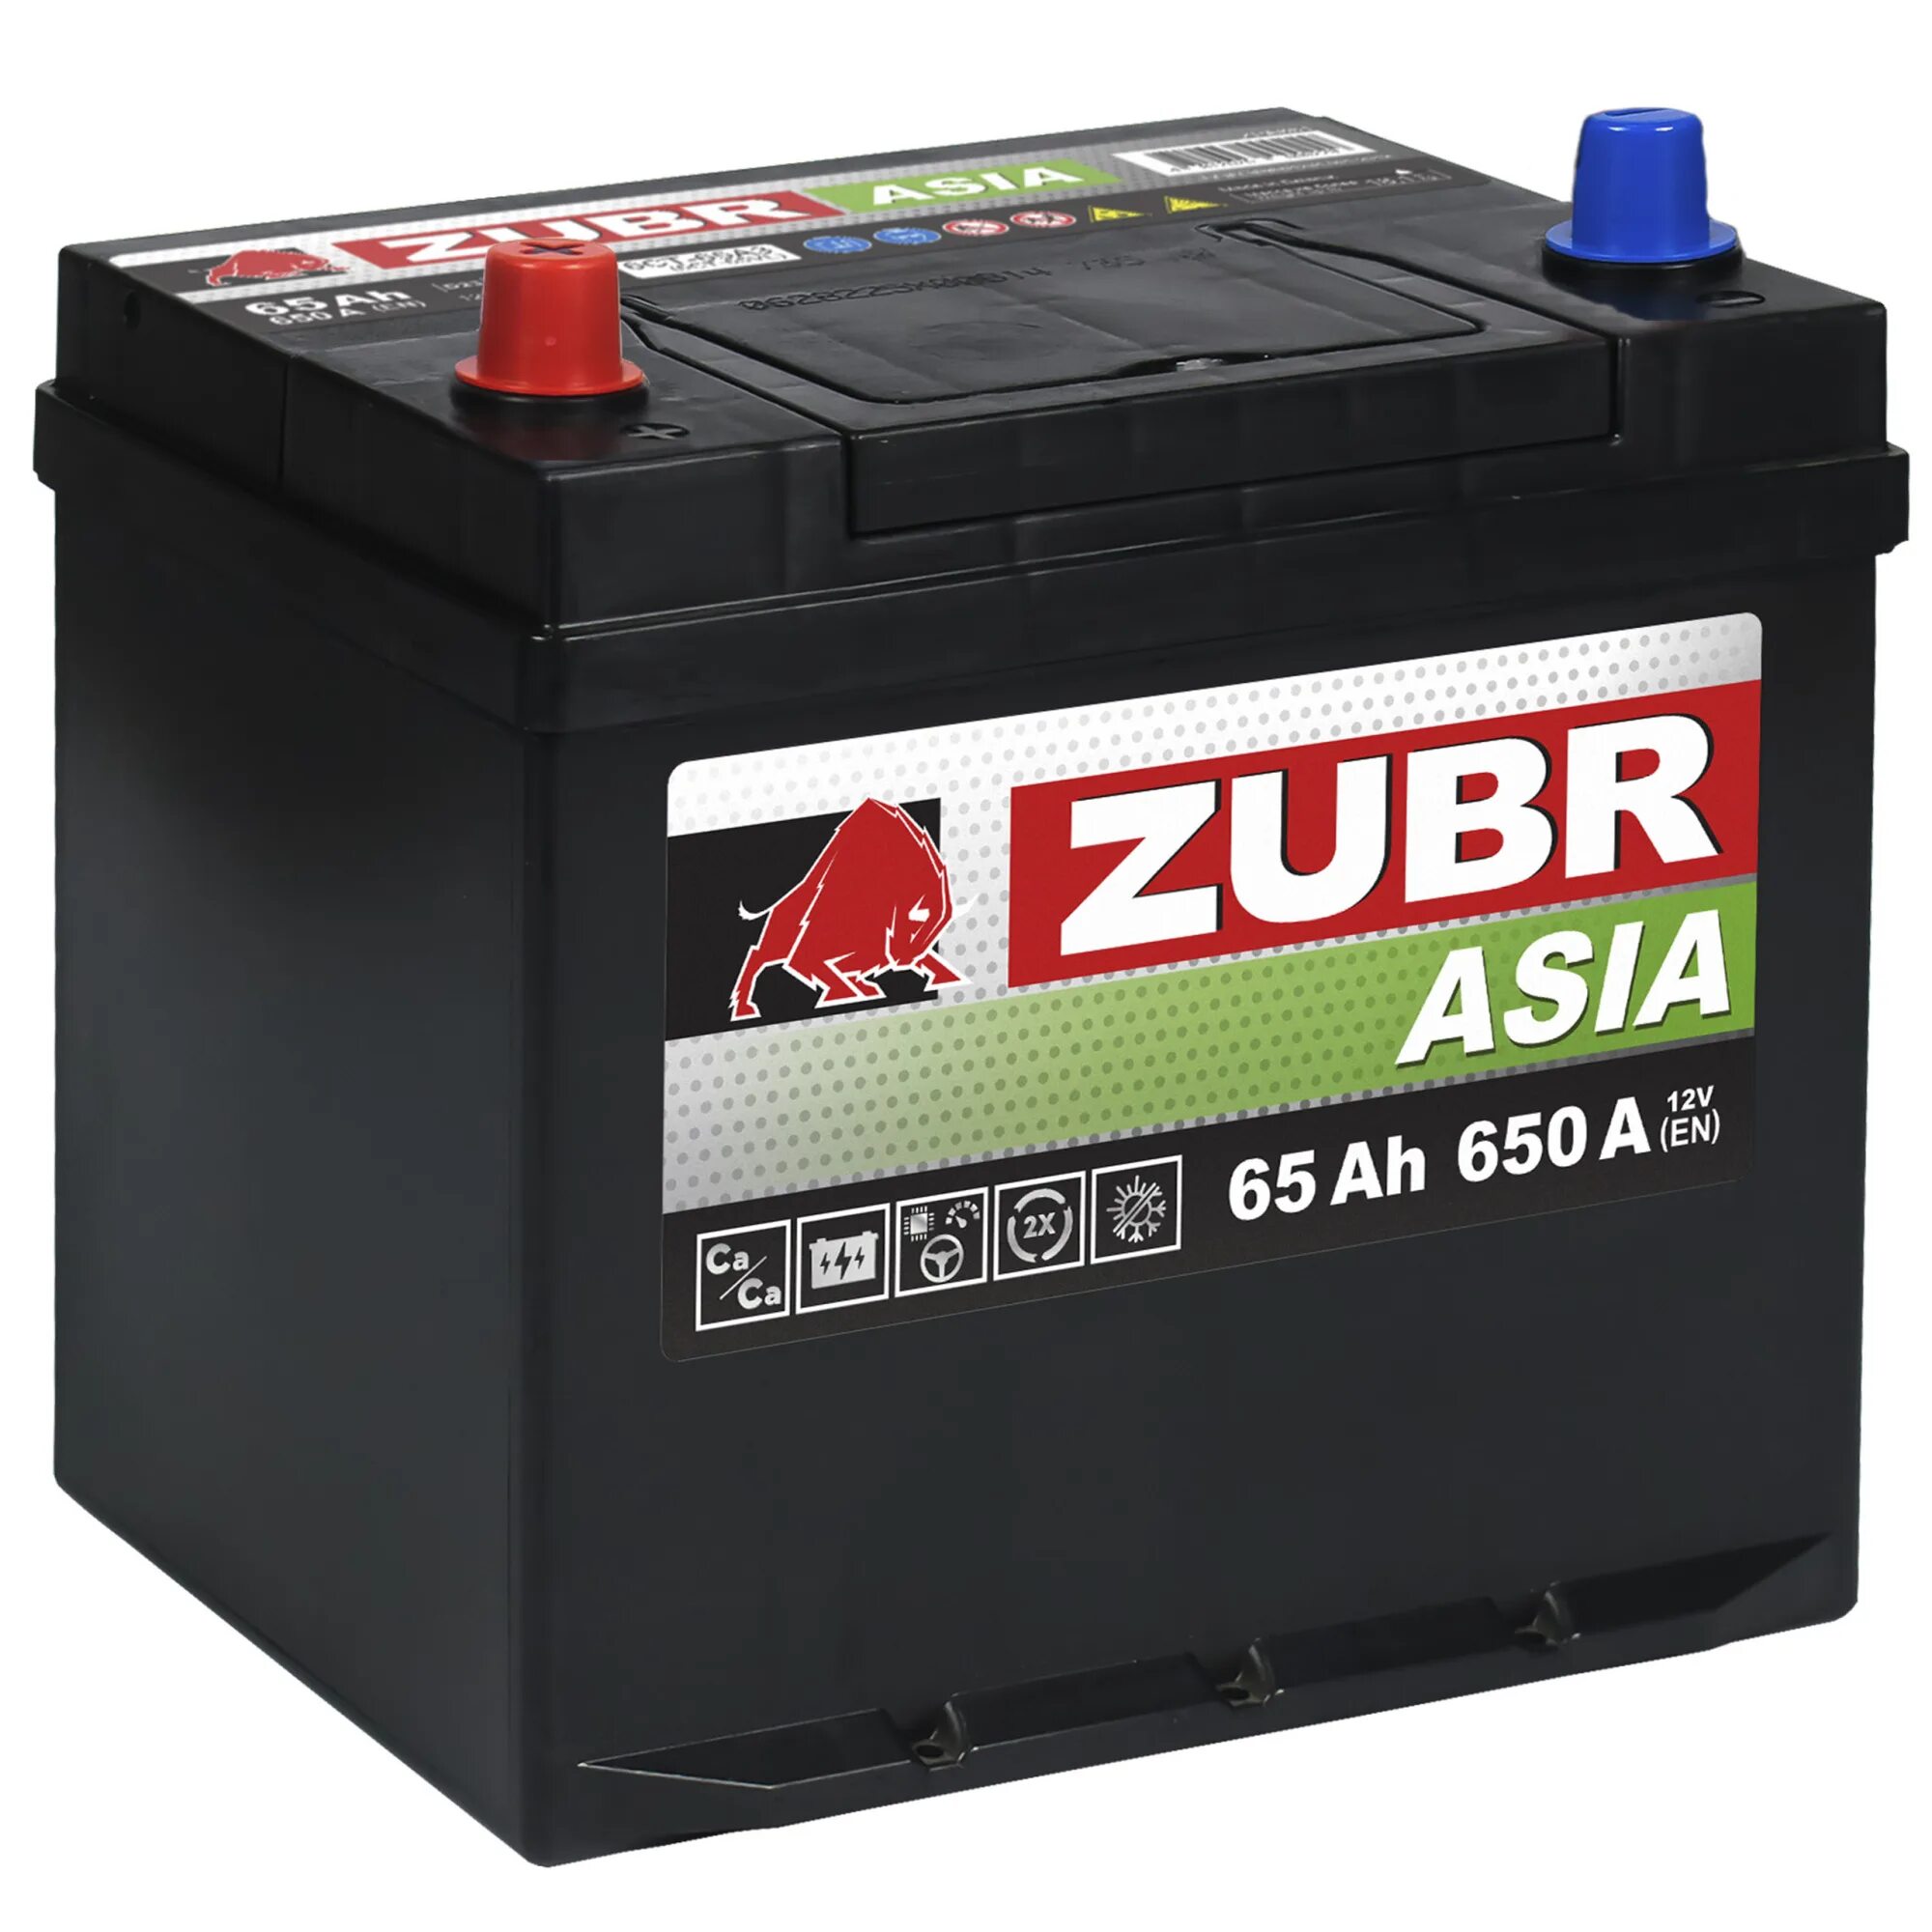 Zubr аккумулятор 75 Азия. Аккумулятор автомобильный 12v Zubr Premium. Аккумулятор Zubr Premium Asia 6ст-75. Аккумулятор Zubr Premium Asia 6ст-75 прямая полярность. Аккумулятор asia 75